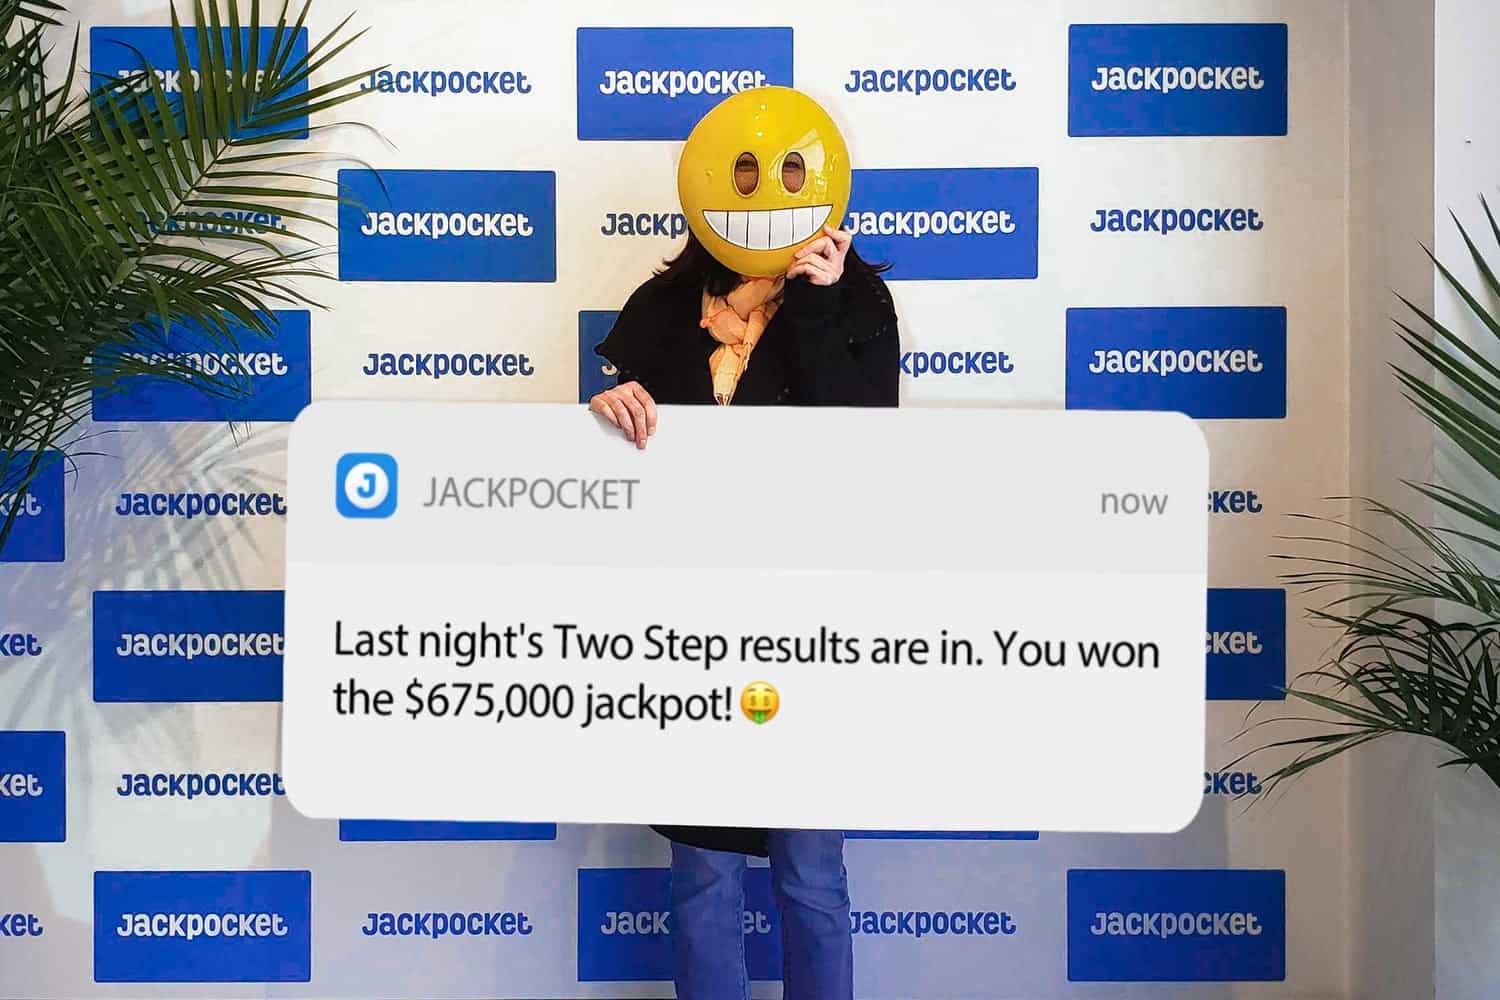 Jackpocket's two step jackpot winner